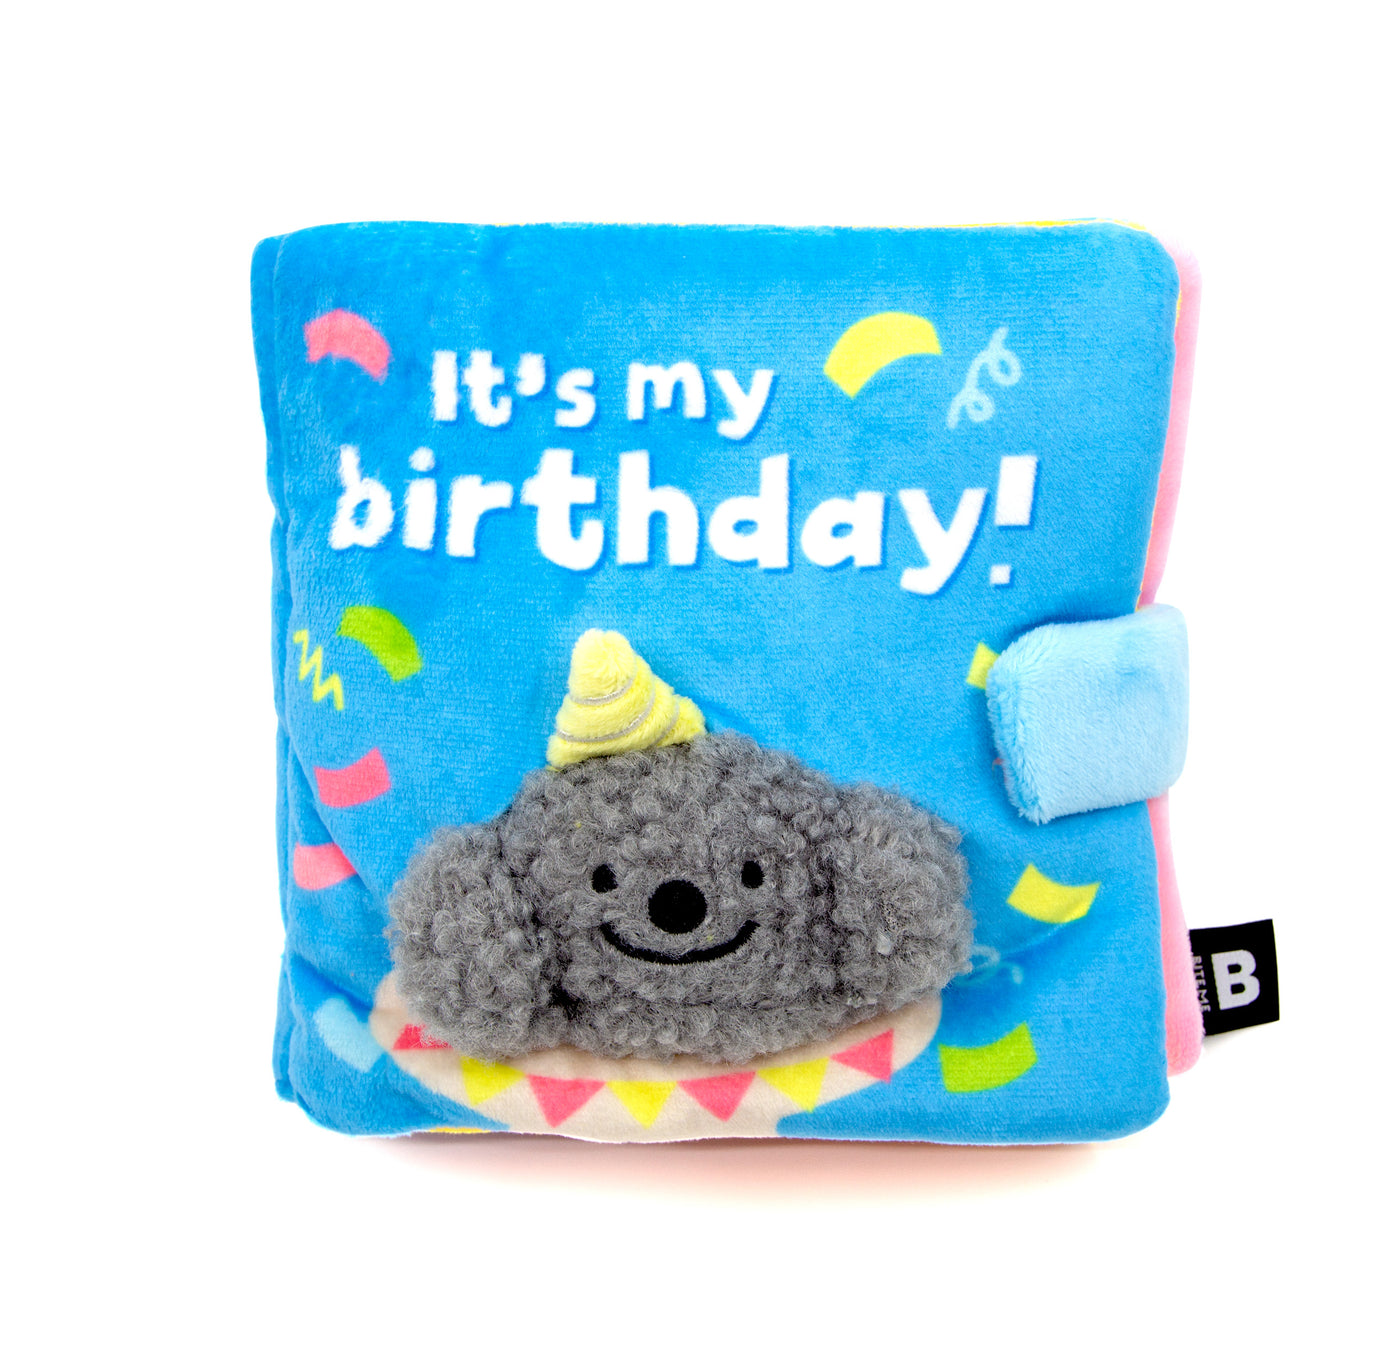 Happy Birthday Doggy Game Book - Woof² HK